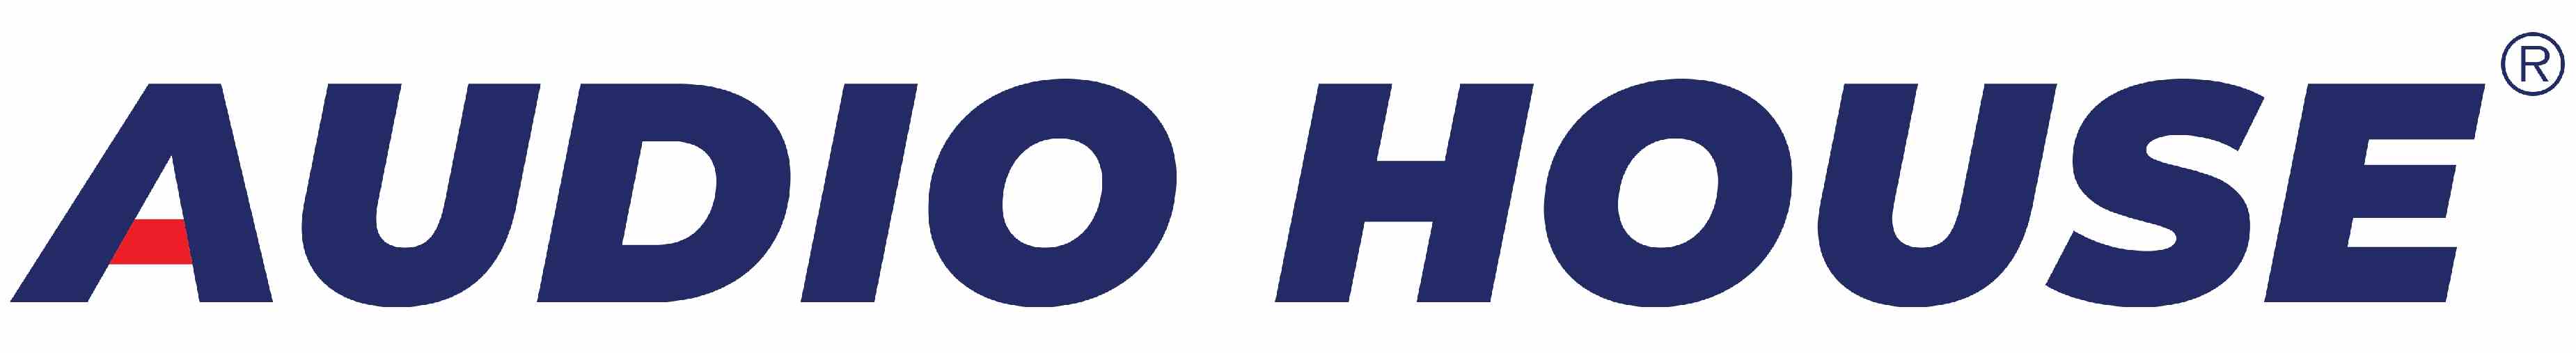 Audio House Marketing Pte Ltd logo